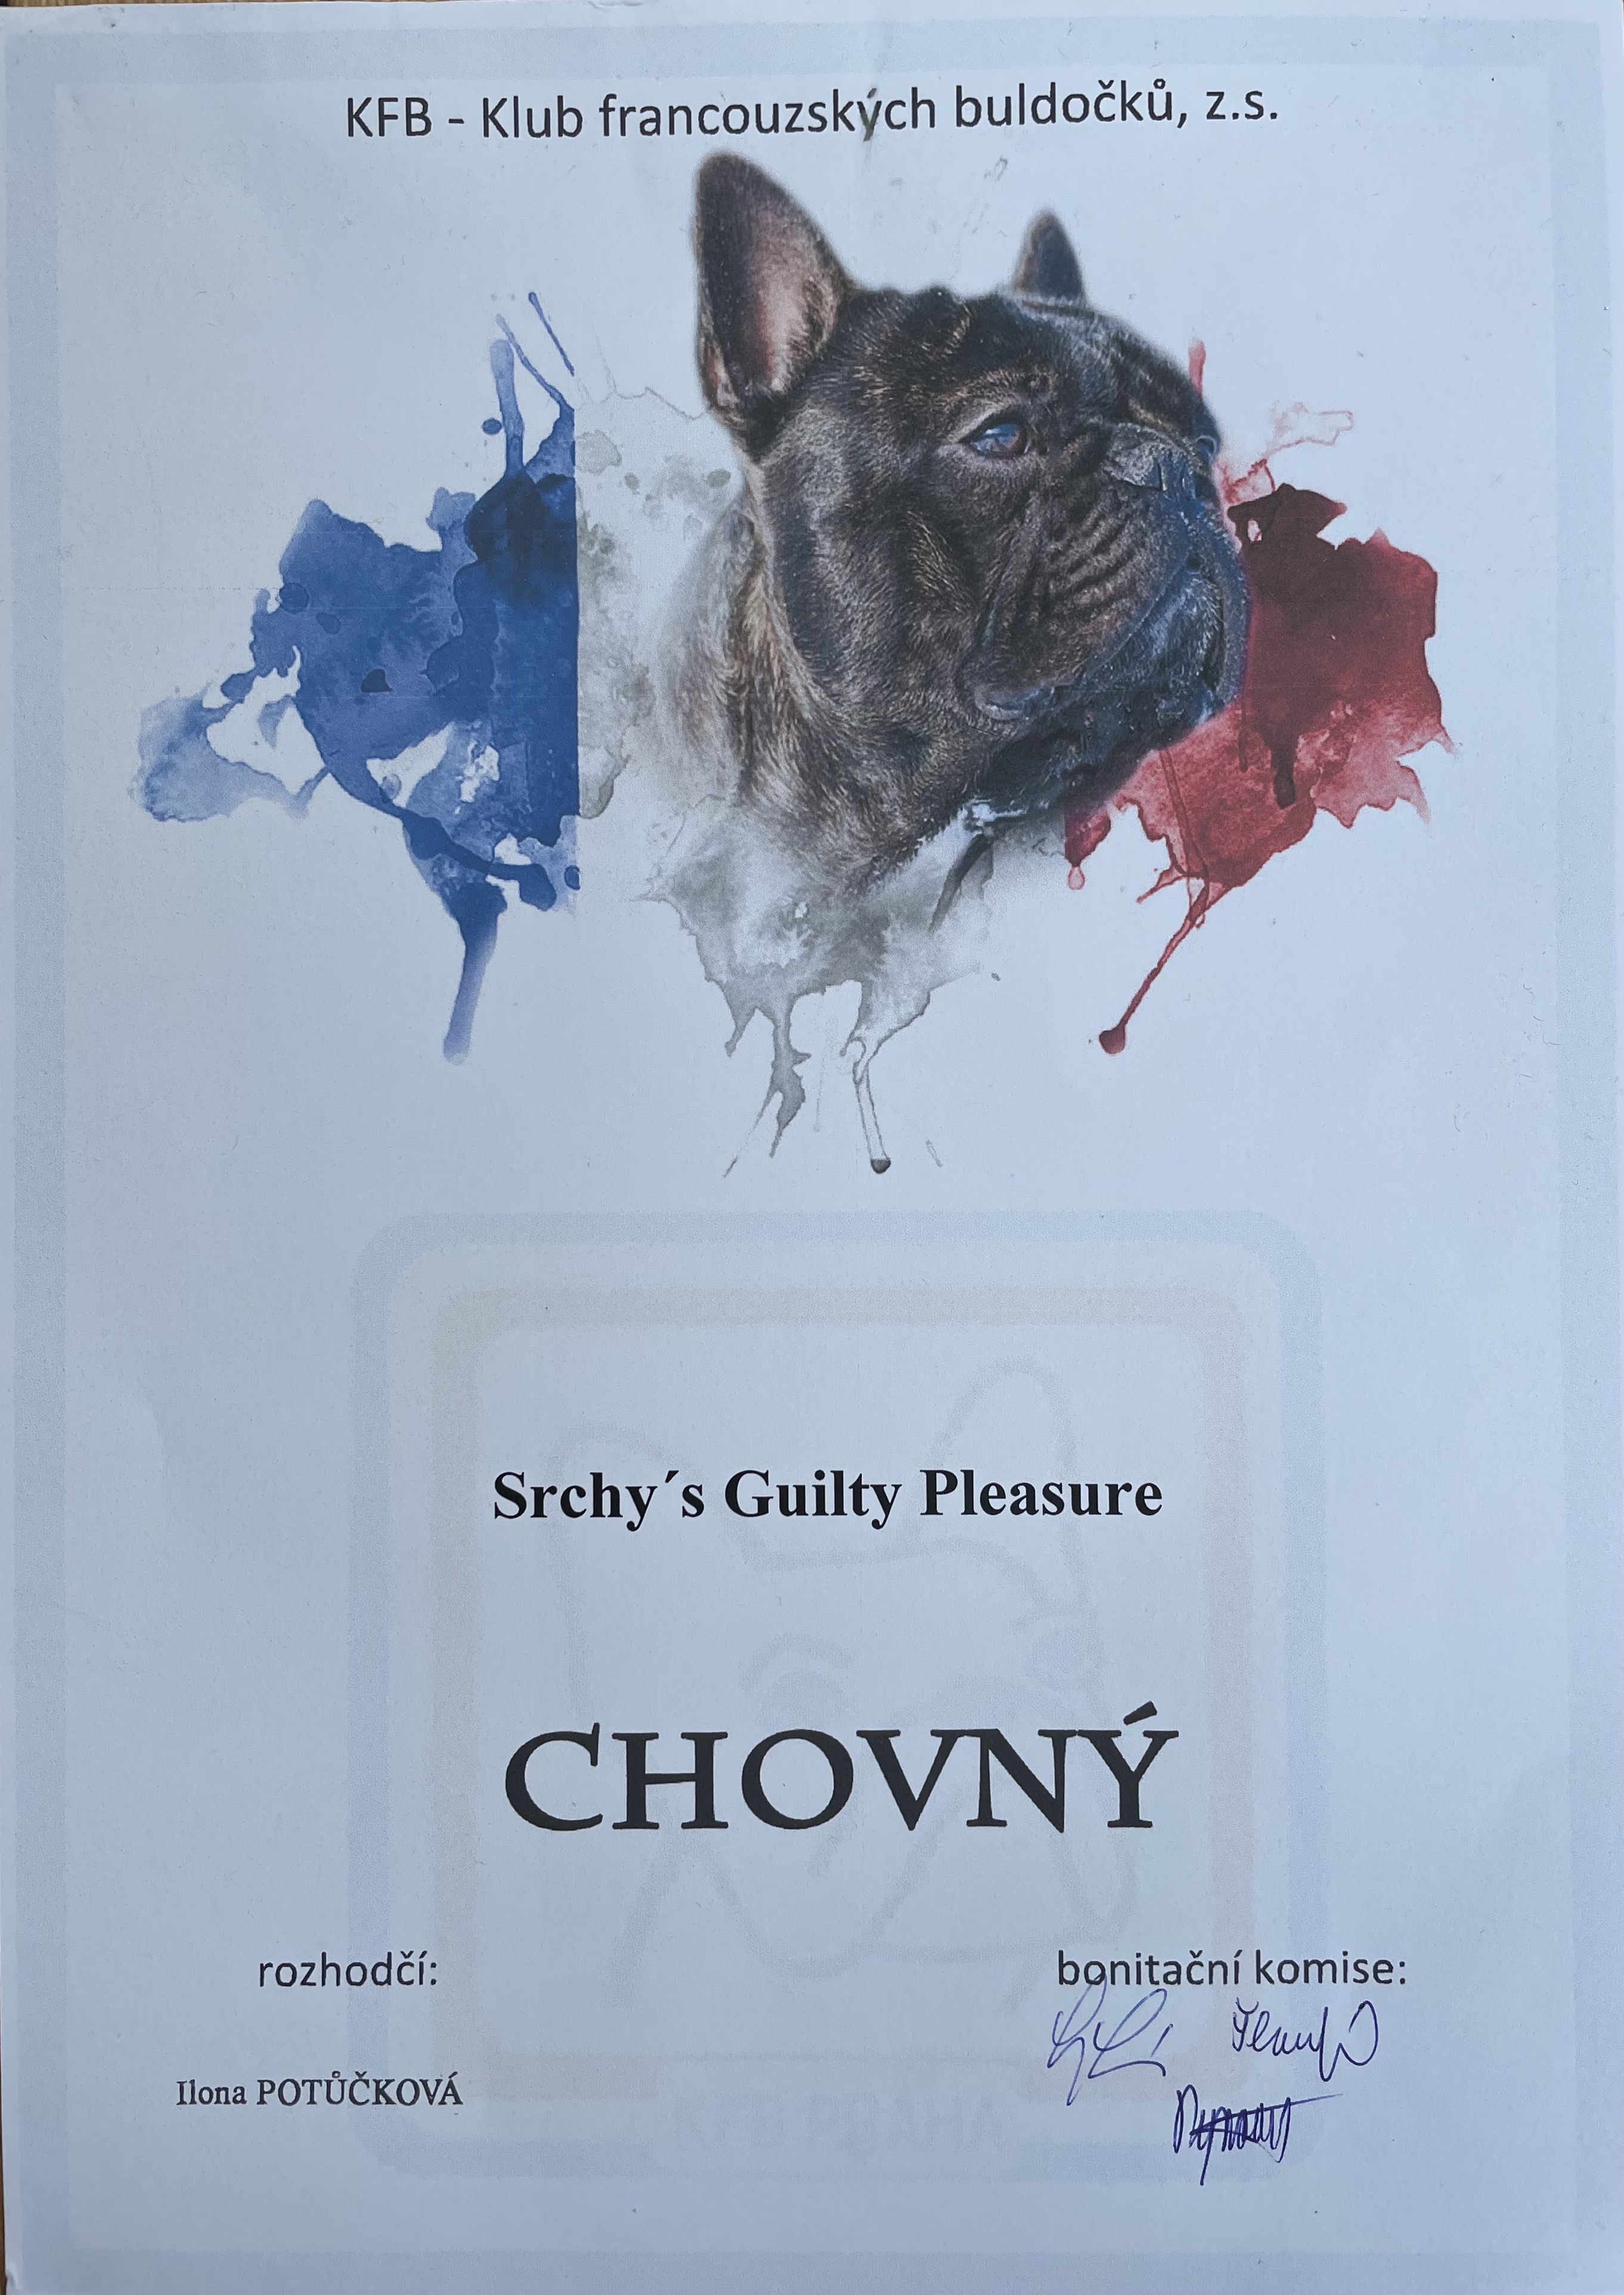 Certifikat chovnosti Srcky's Guilty Pleasure